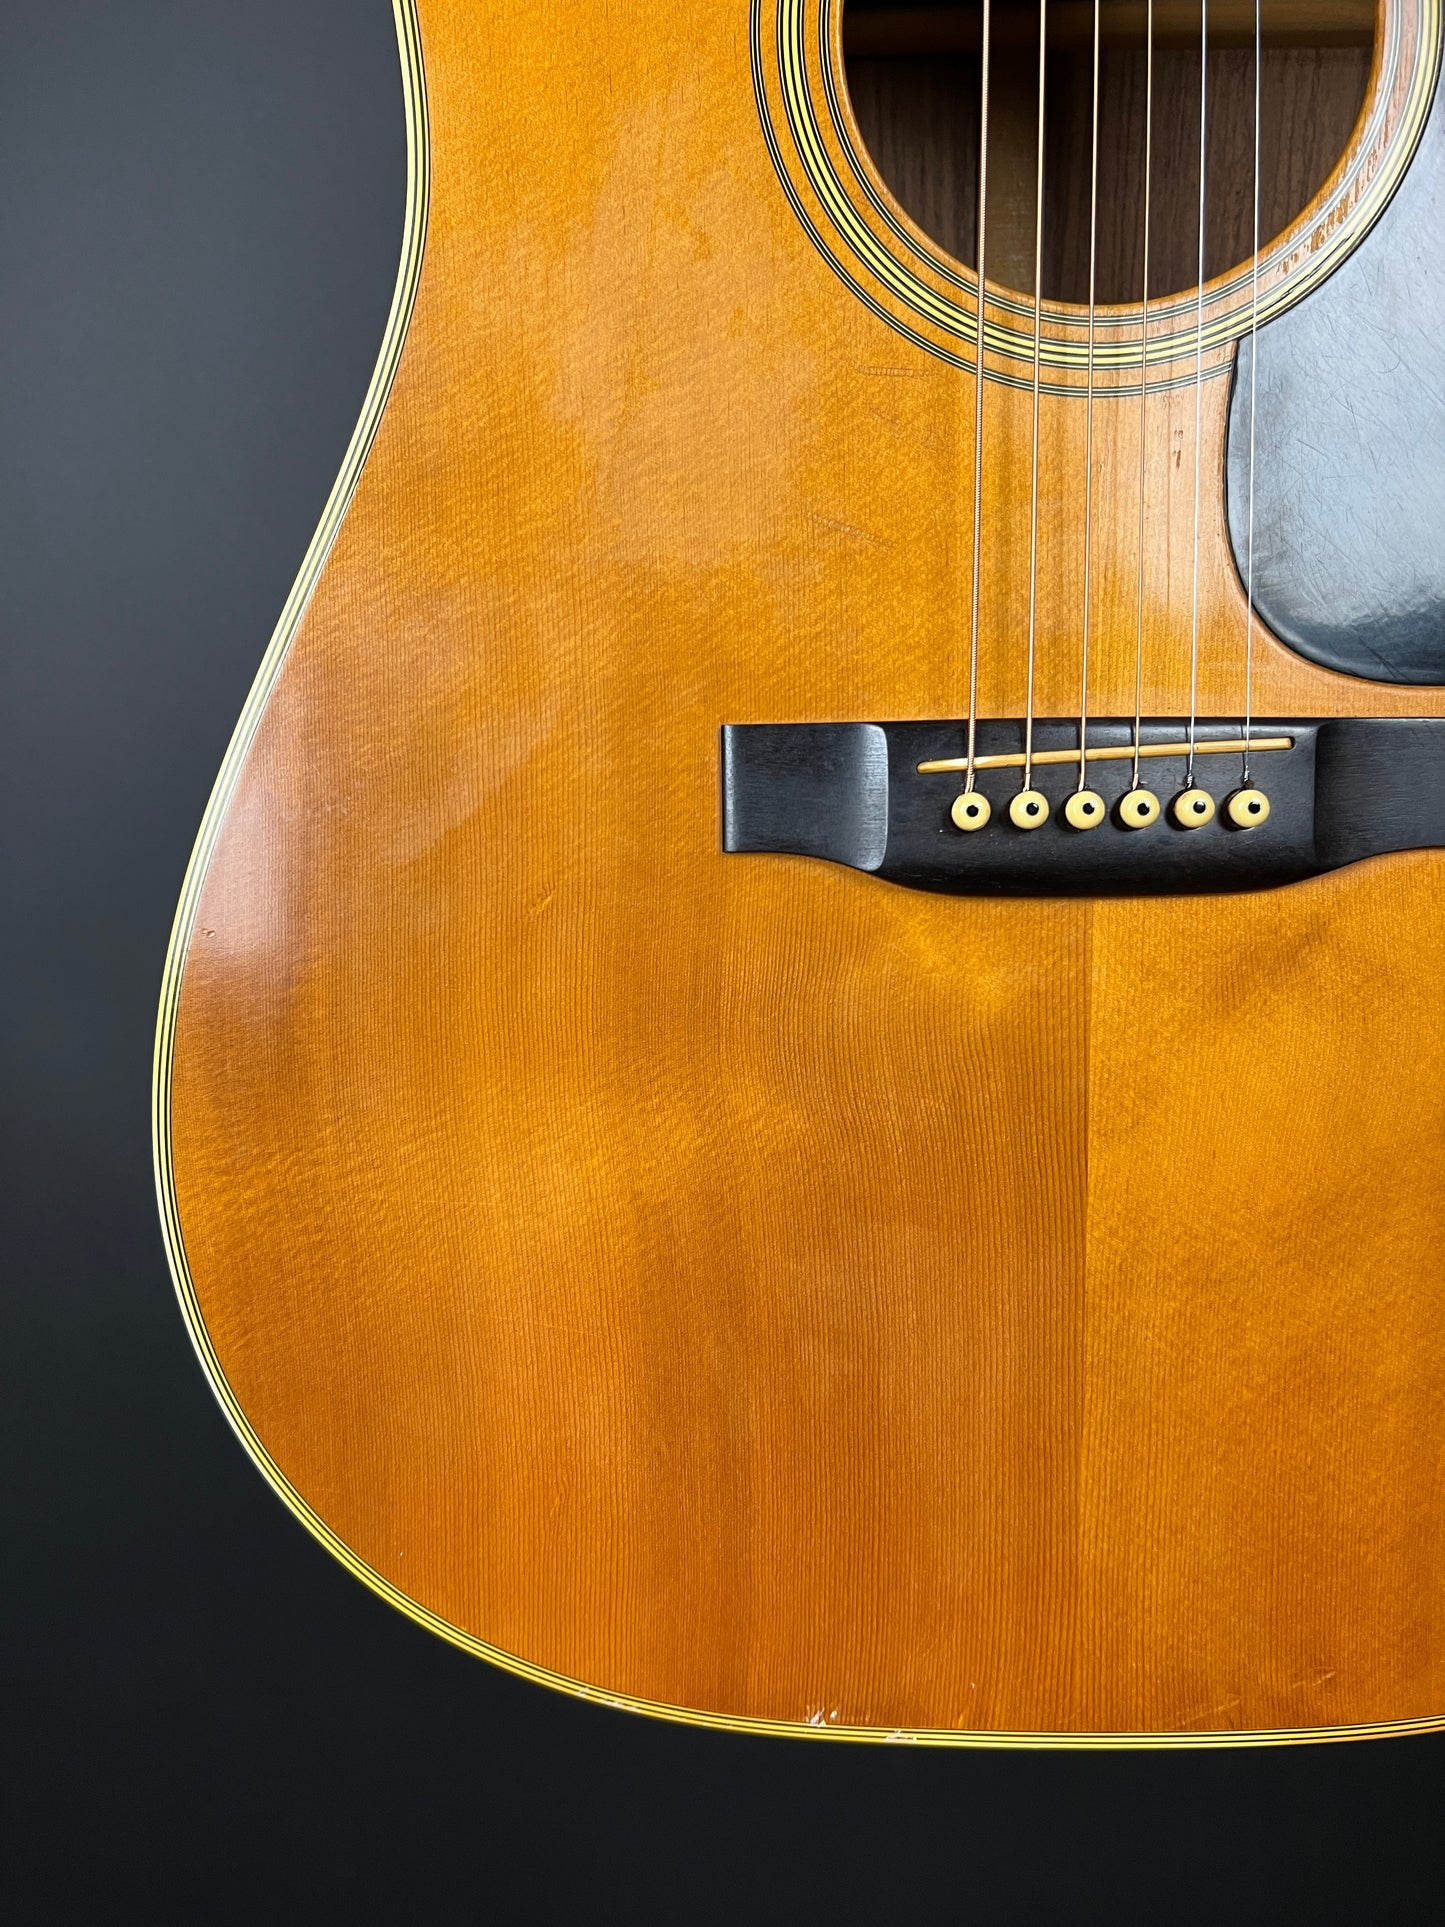 SOLD - 1980 Martin D28 Acoustic Guitar